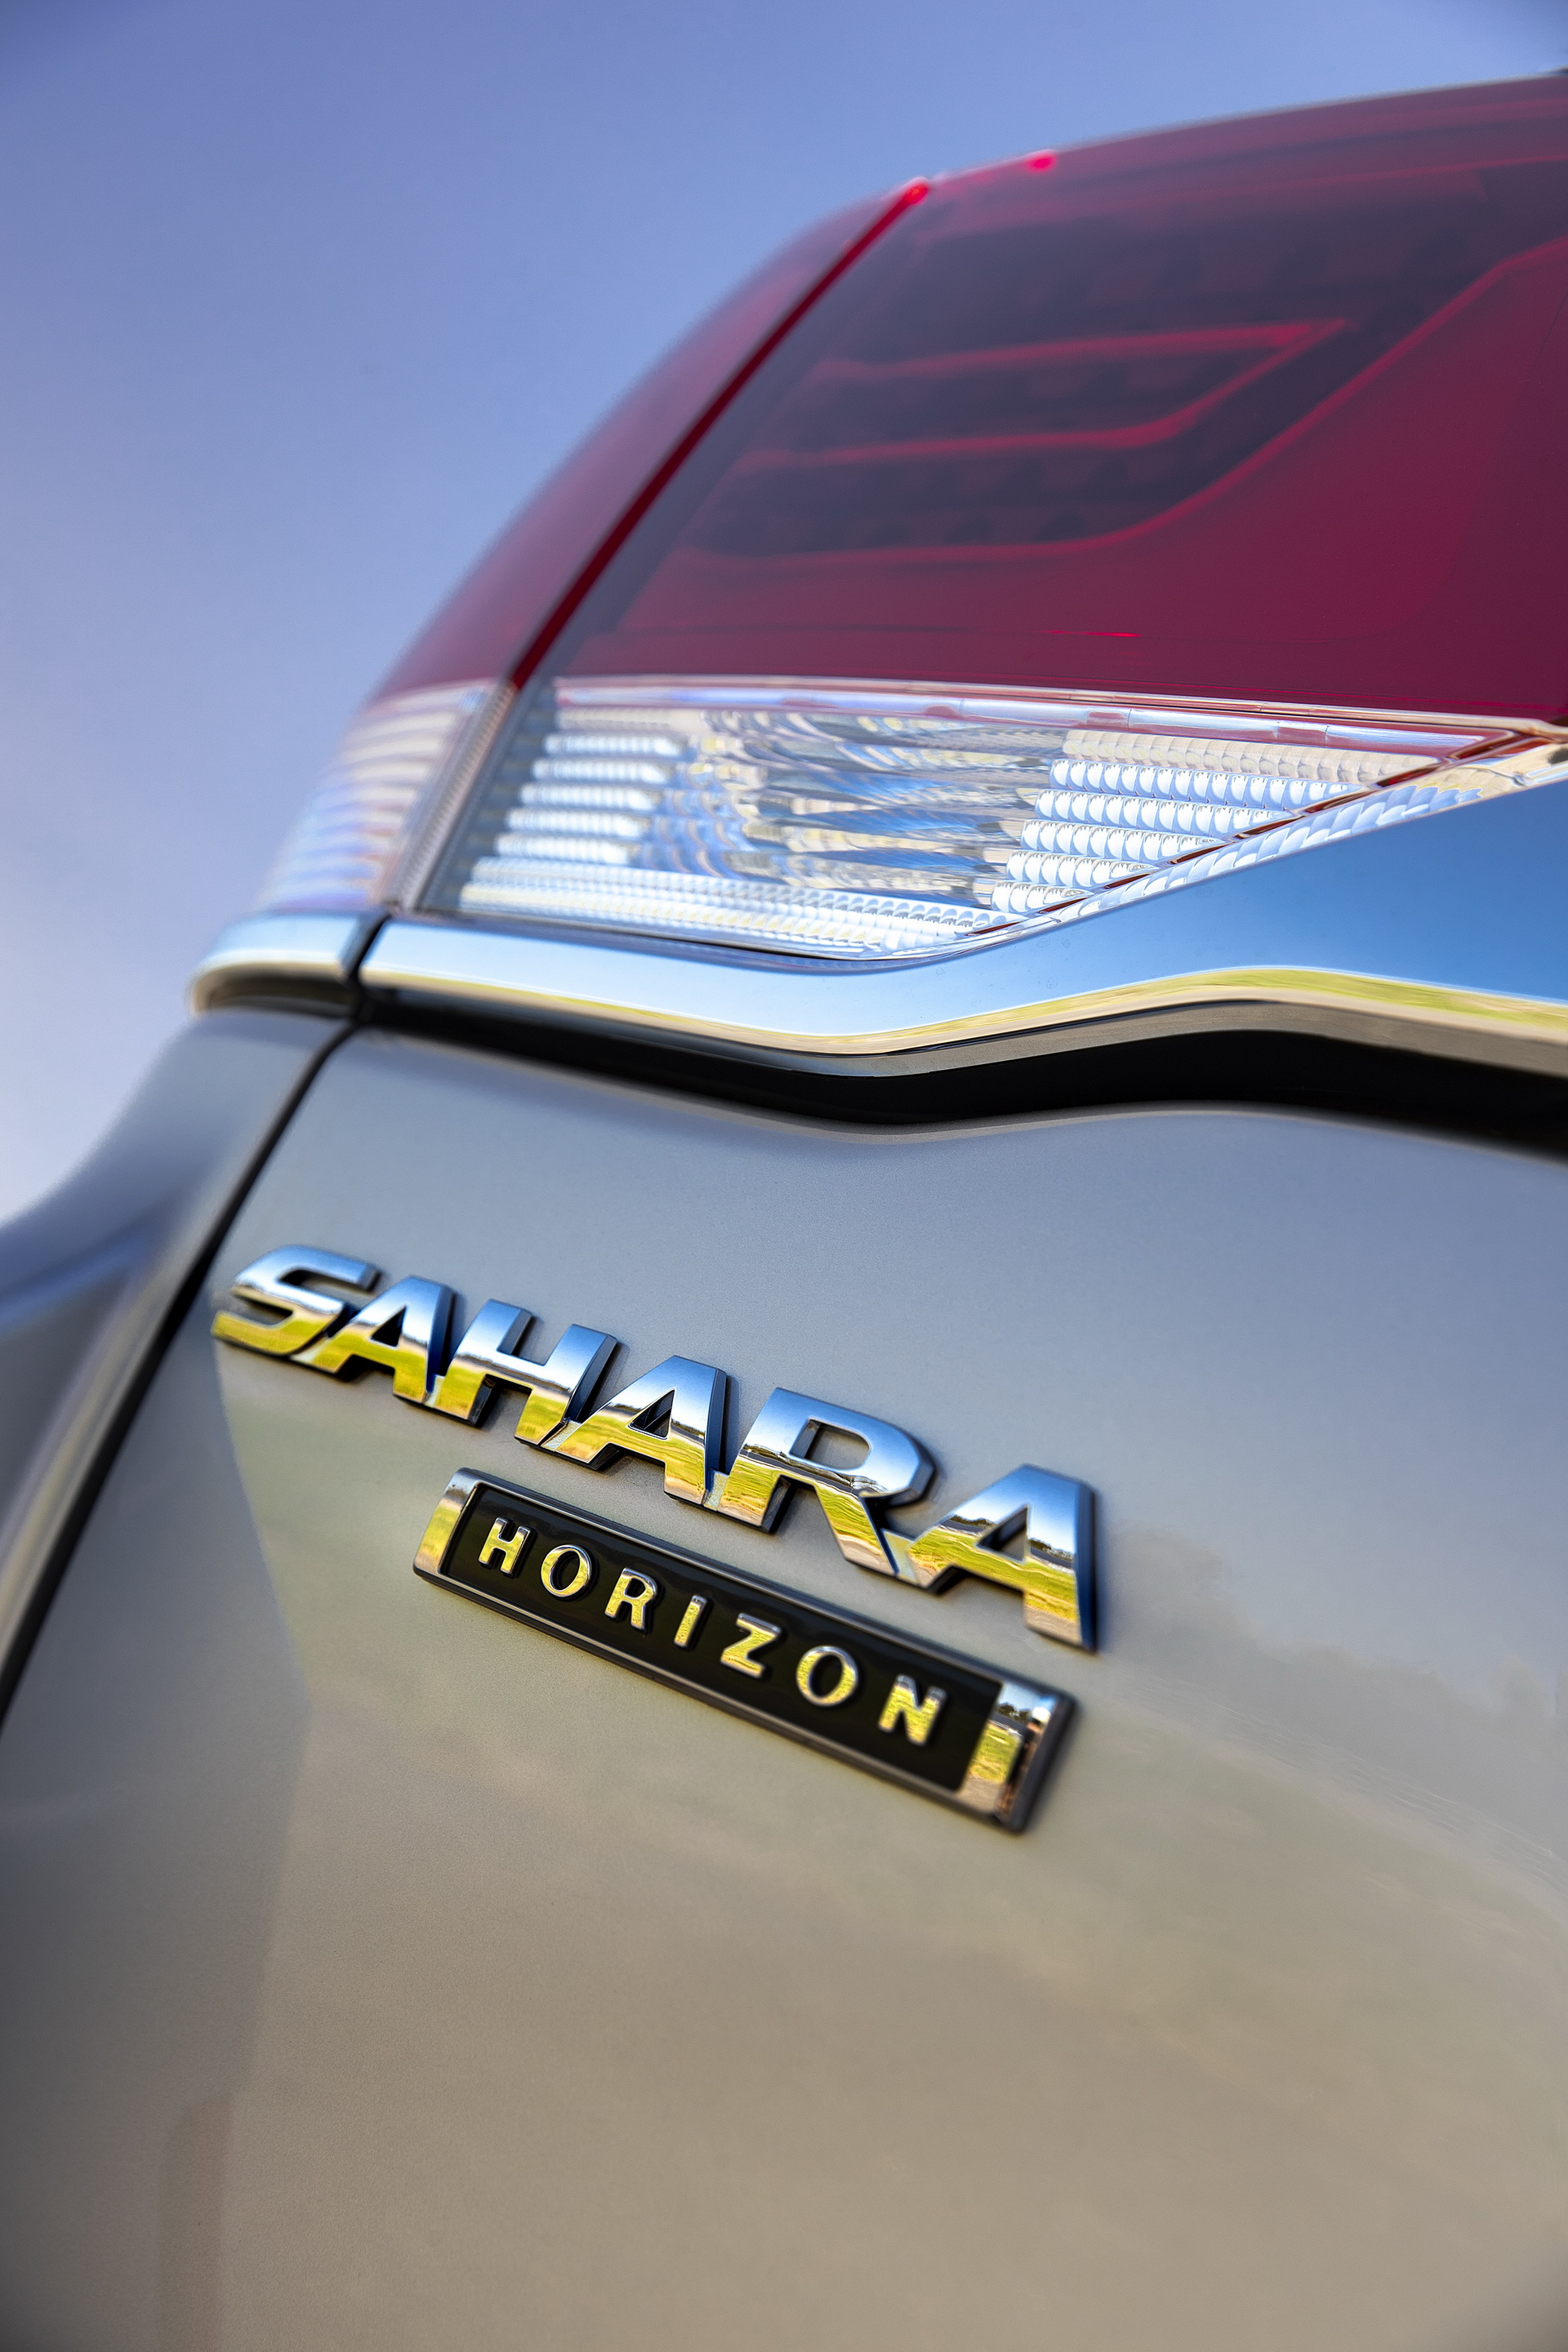 2020-toyota-laund-cruiser-horizon-sahara-edition-australia-4.jpg